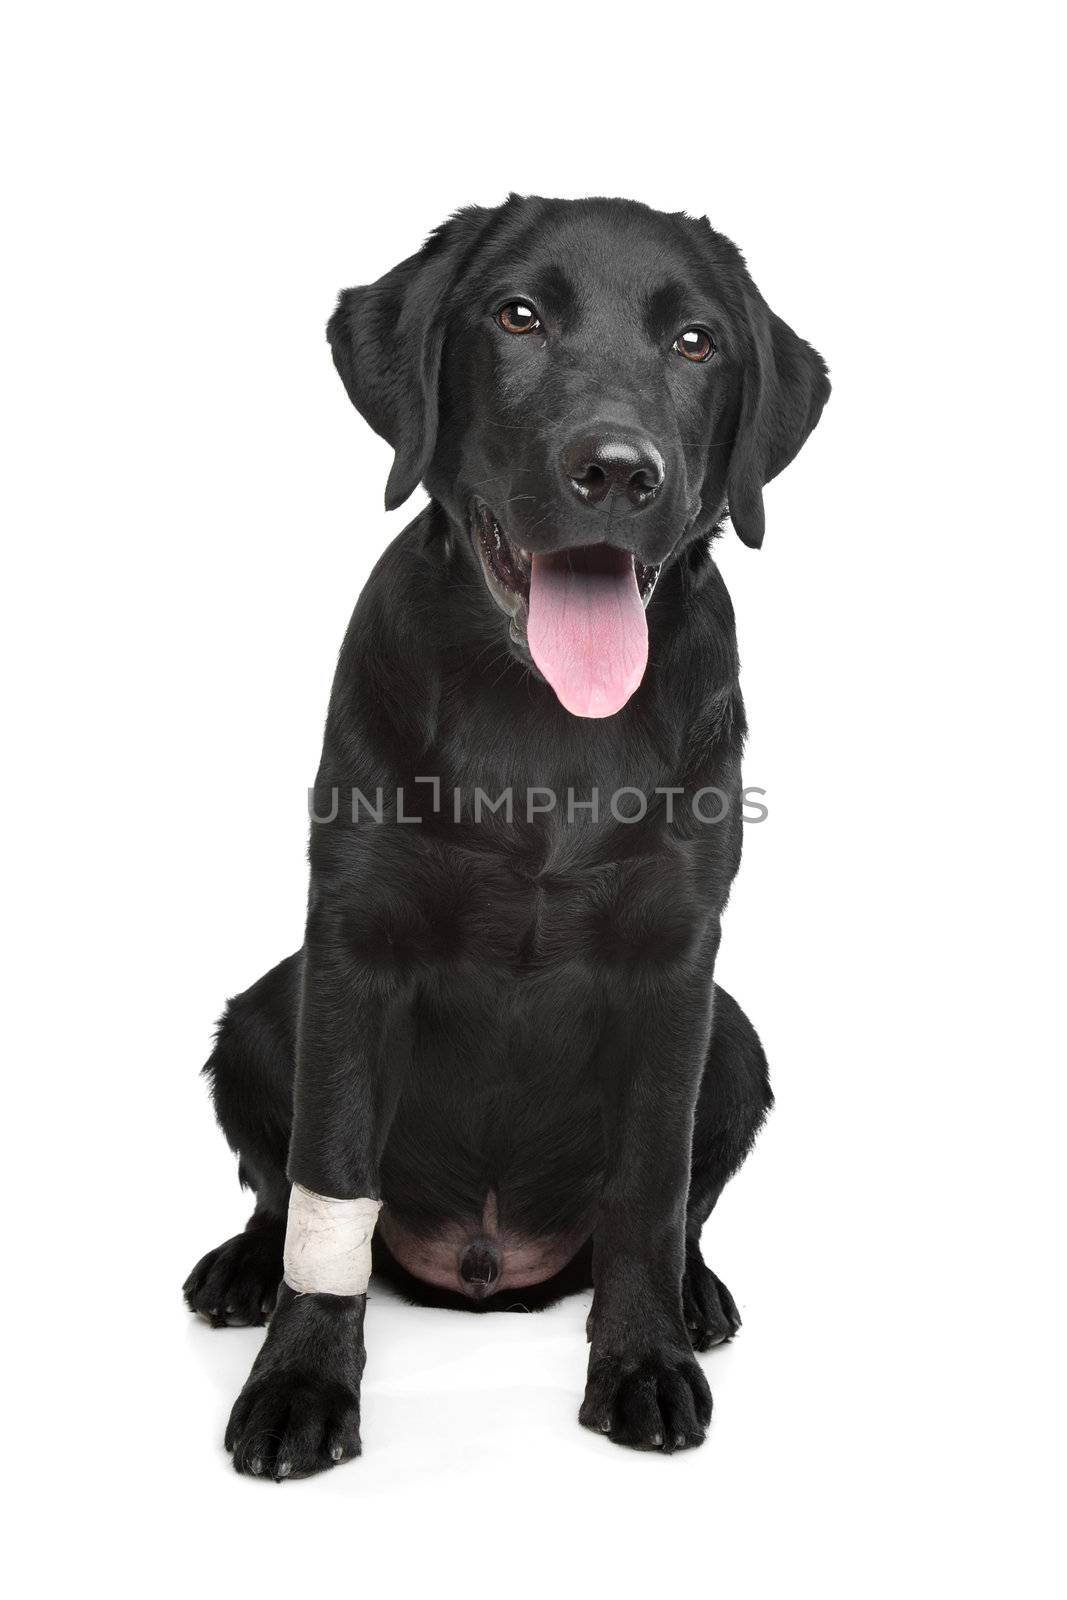 Black Labrador puppy with plaster